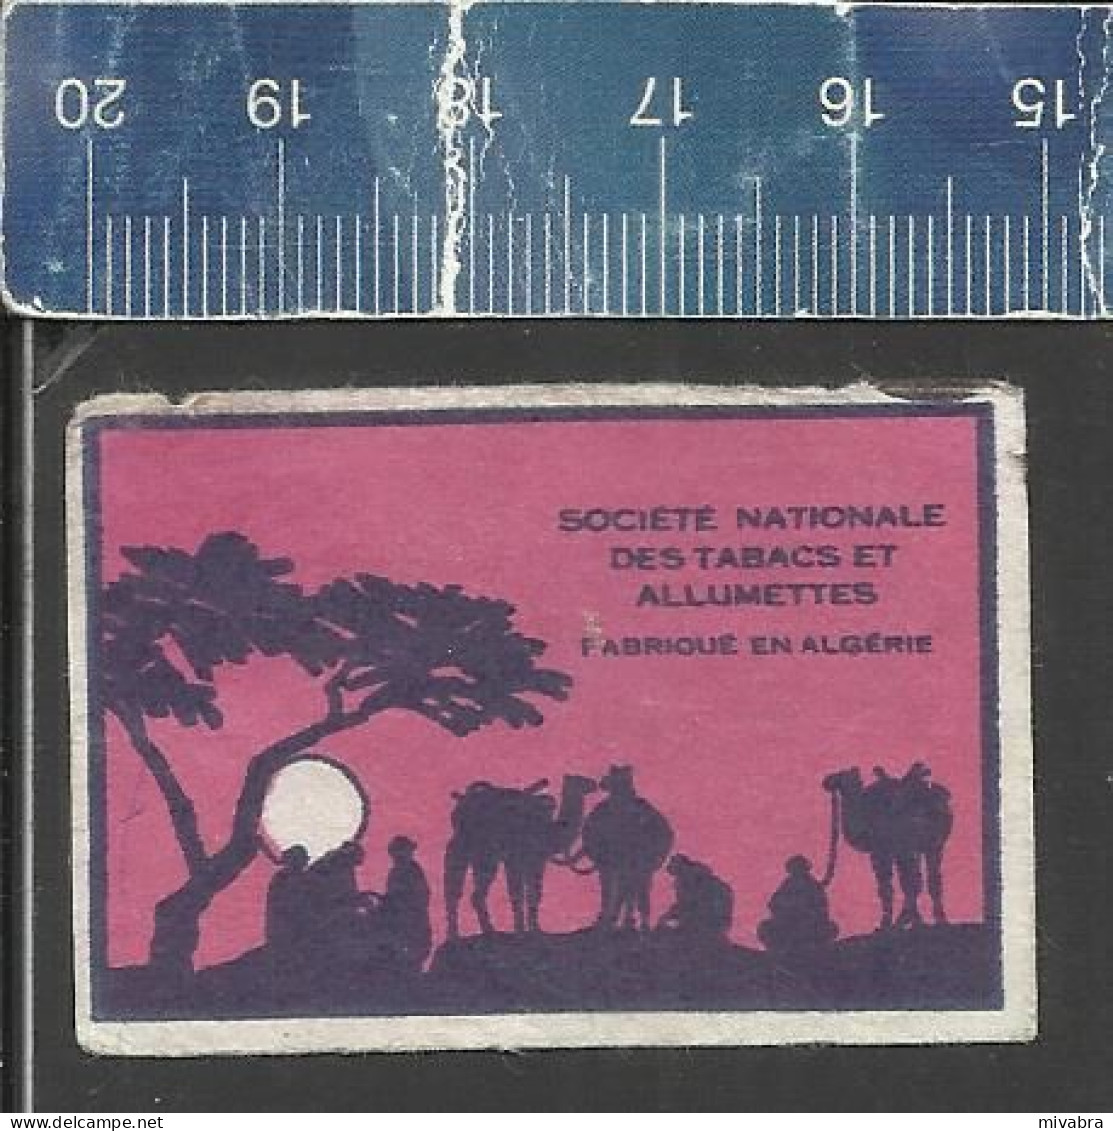 SUNSET WITH CARAVAN & CAMELS (WHITE SUN) - OLD MATCHBOX LABEL ALGERIA - Scatole Di Fiammiferi - Etichette